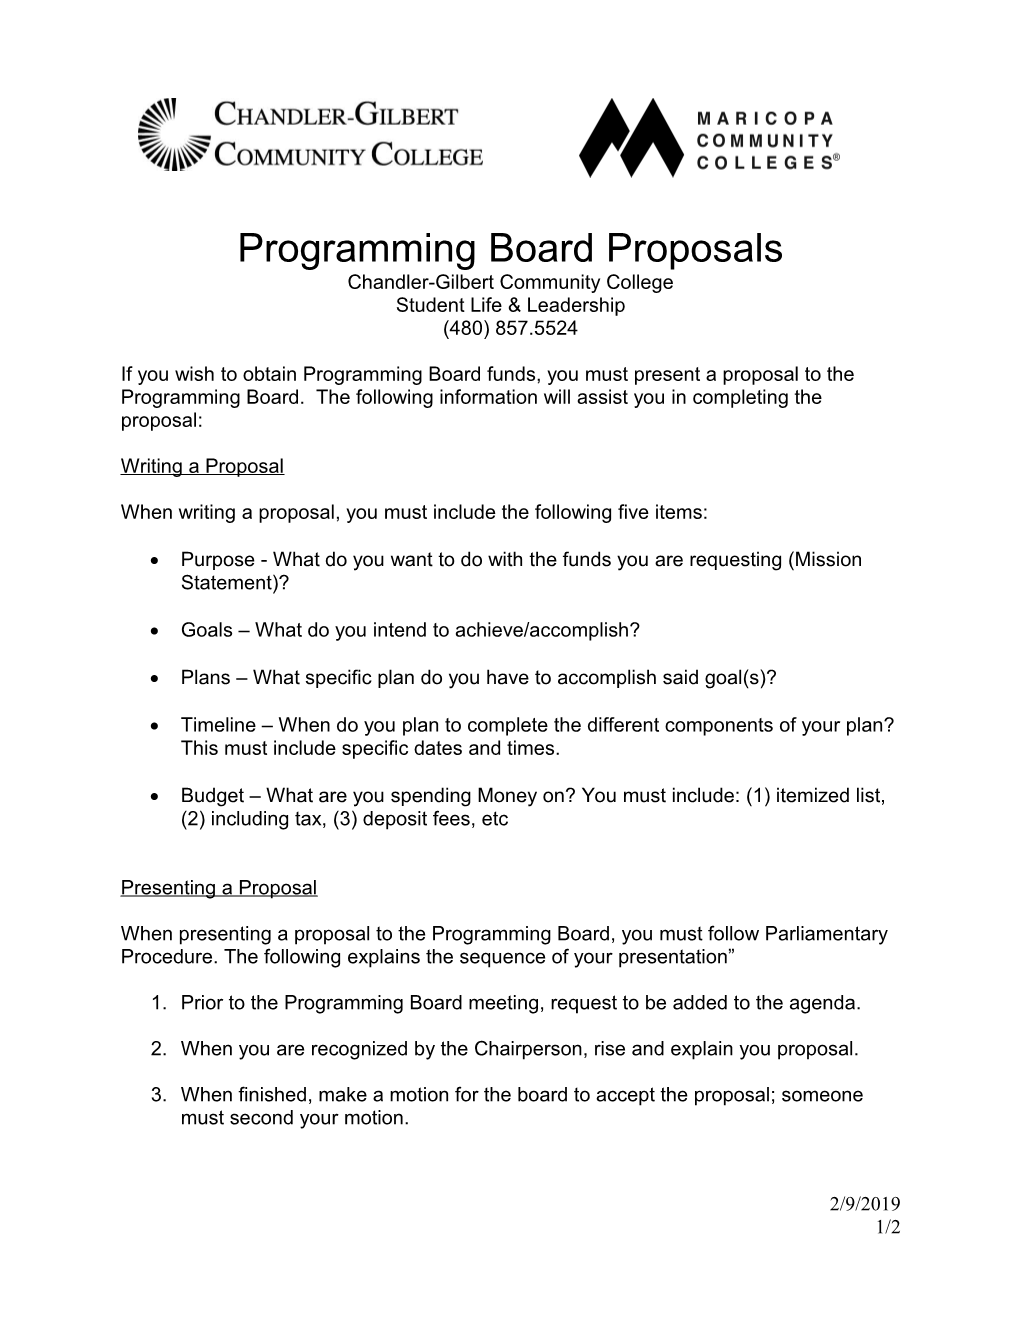 Programming Board Proposal Guidelines